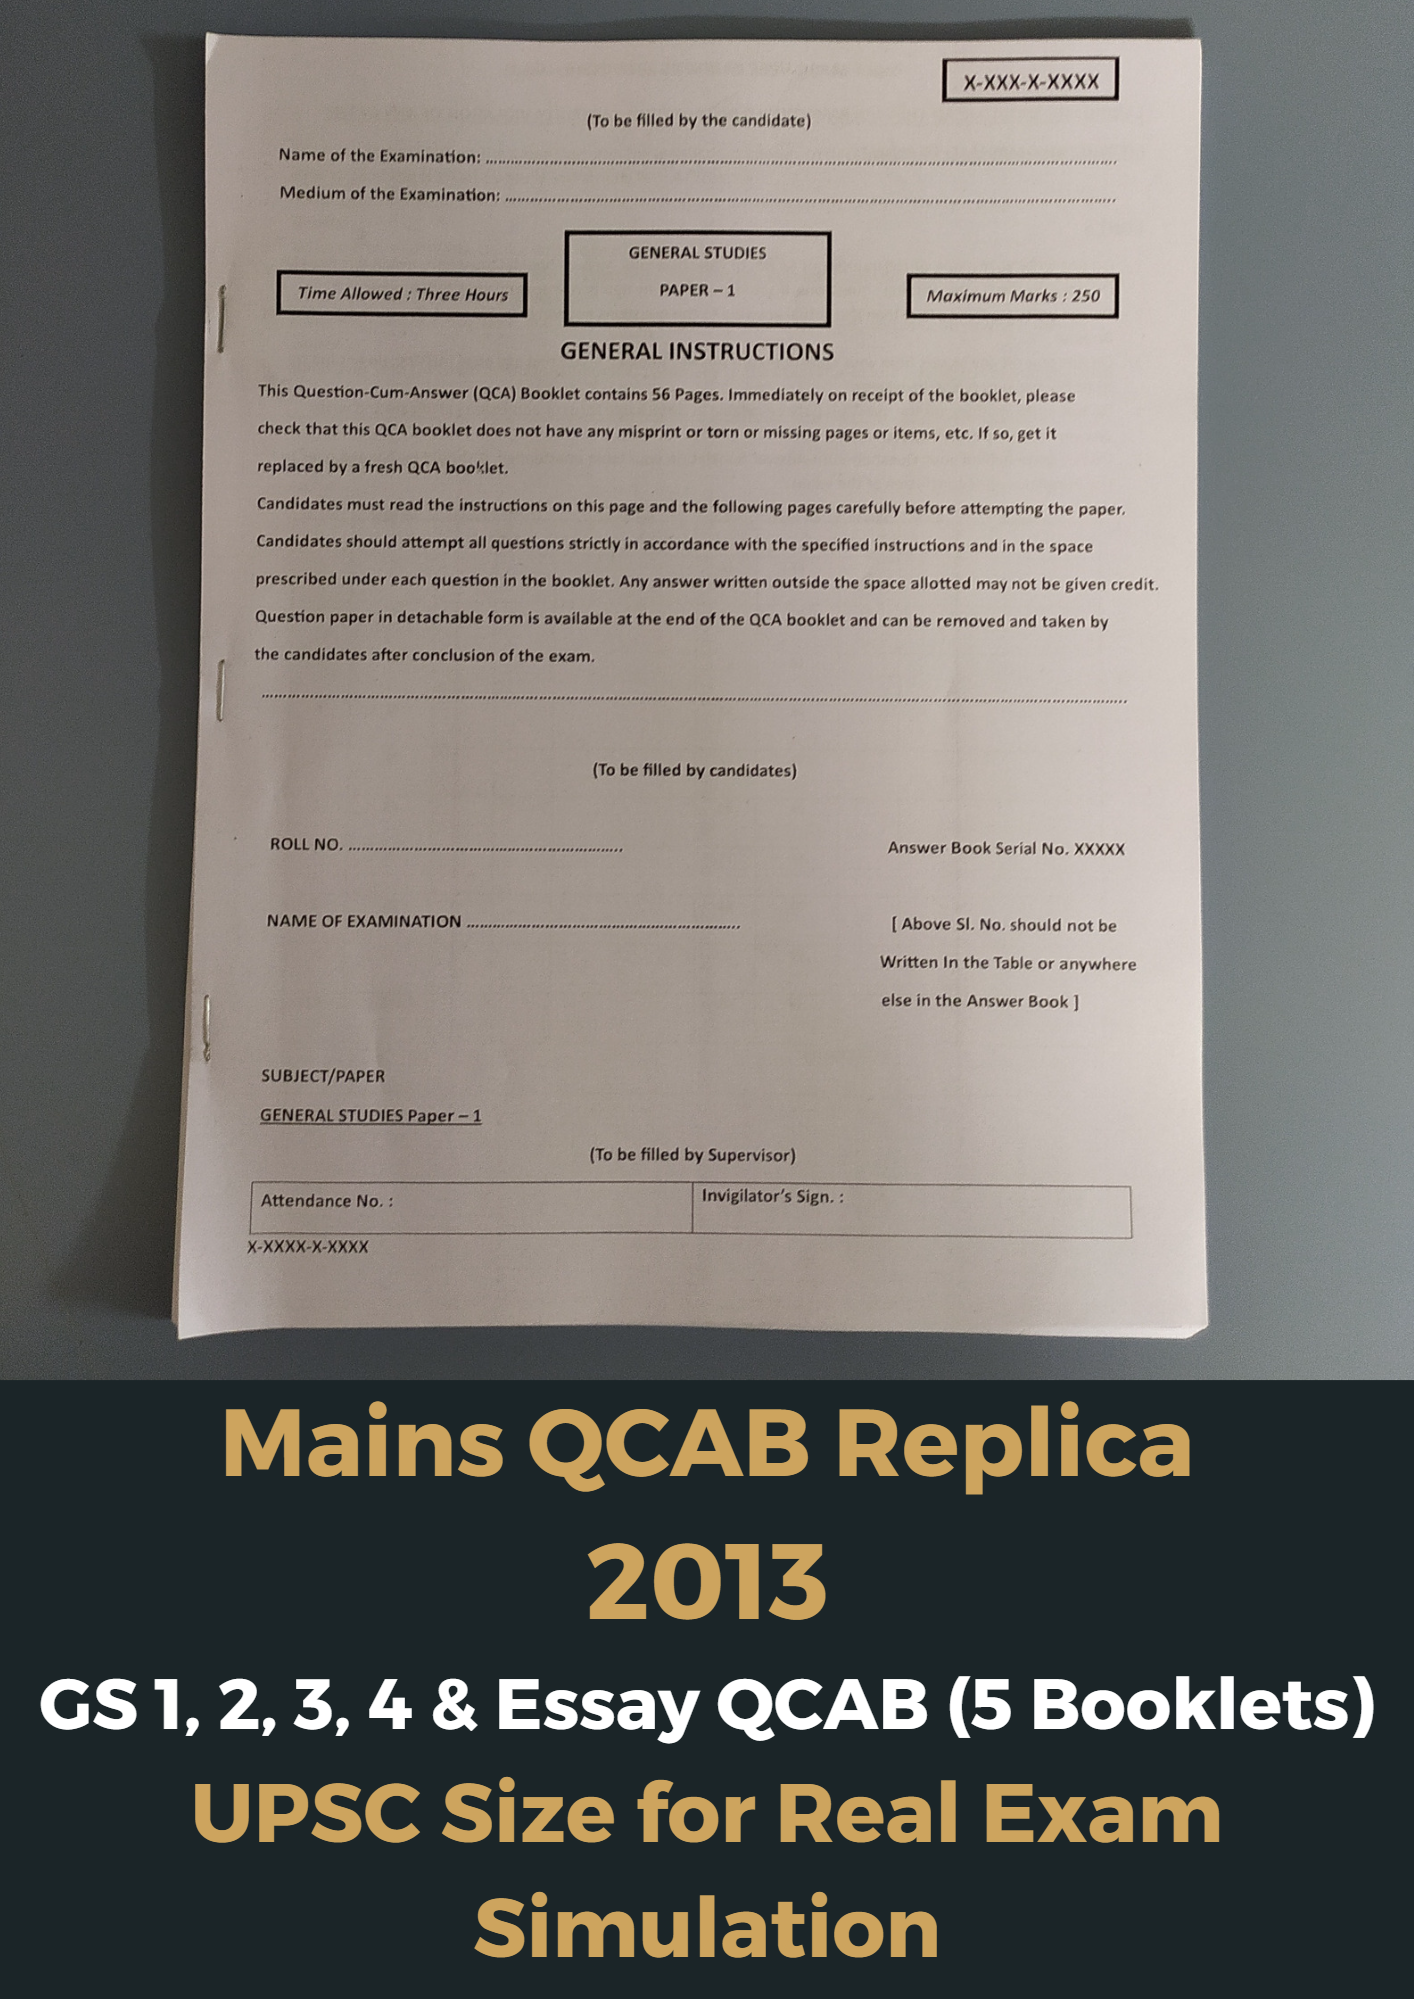 2013 Mains QCAB Replica - GS 1,2,3,4 & Essay (5 Booklets) - UPSC QCAB Size - For Real Exam Simulation